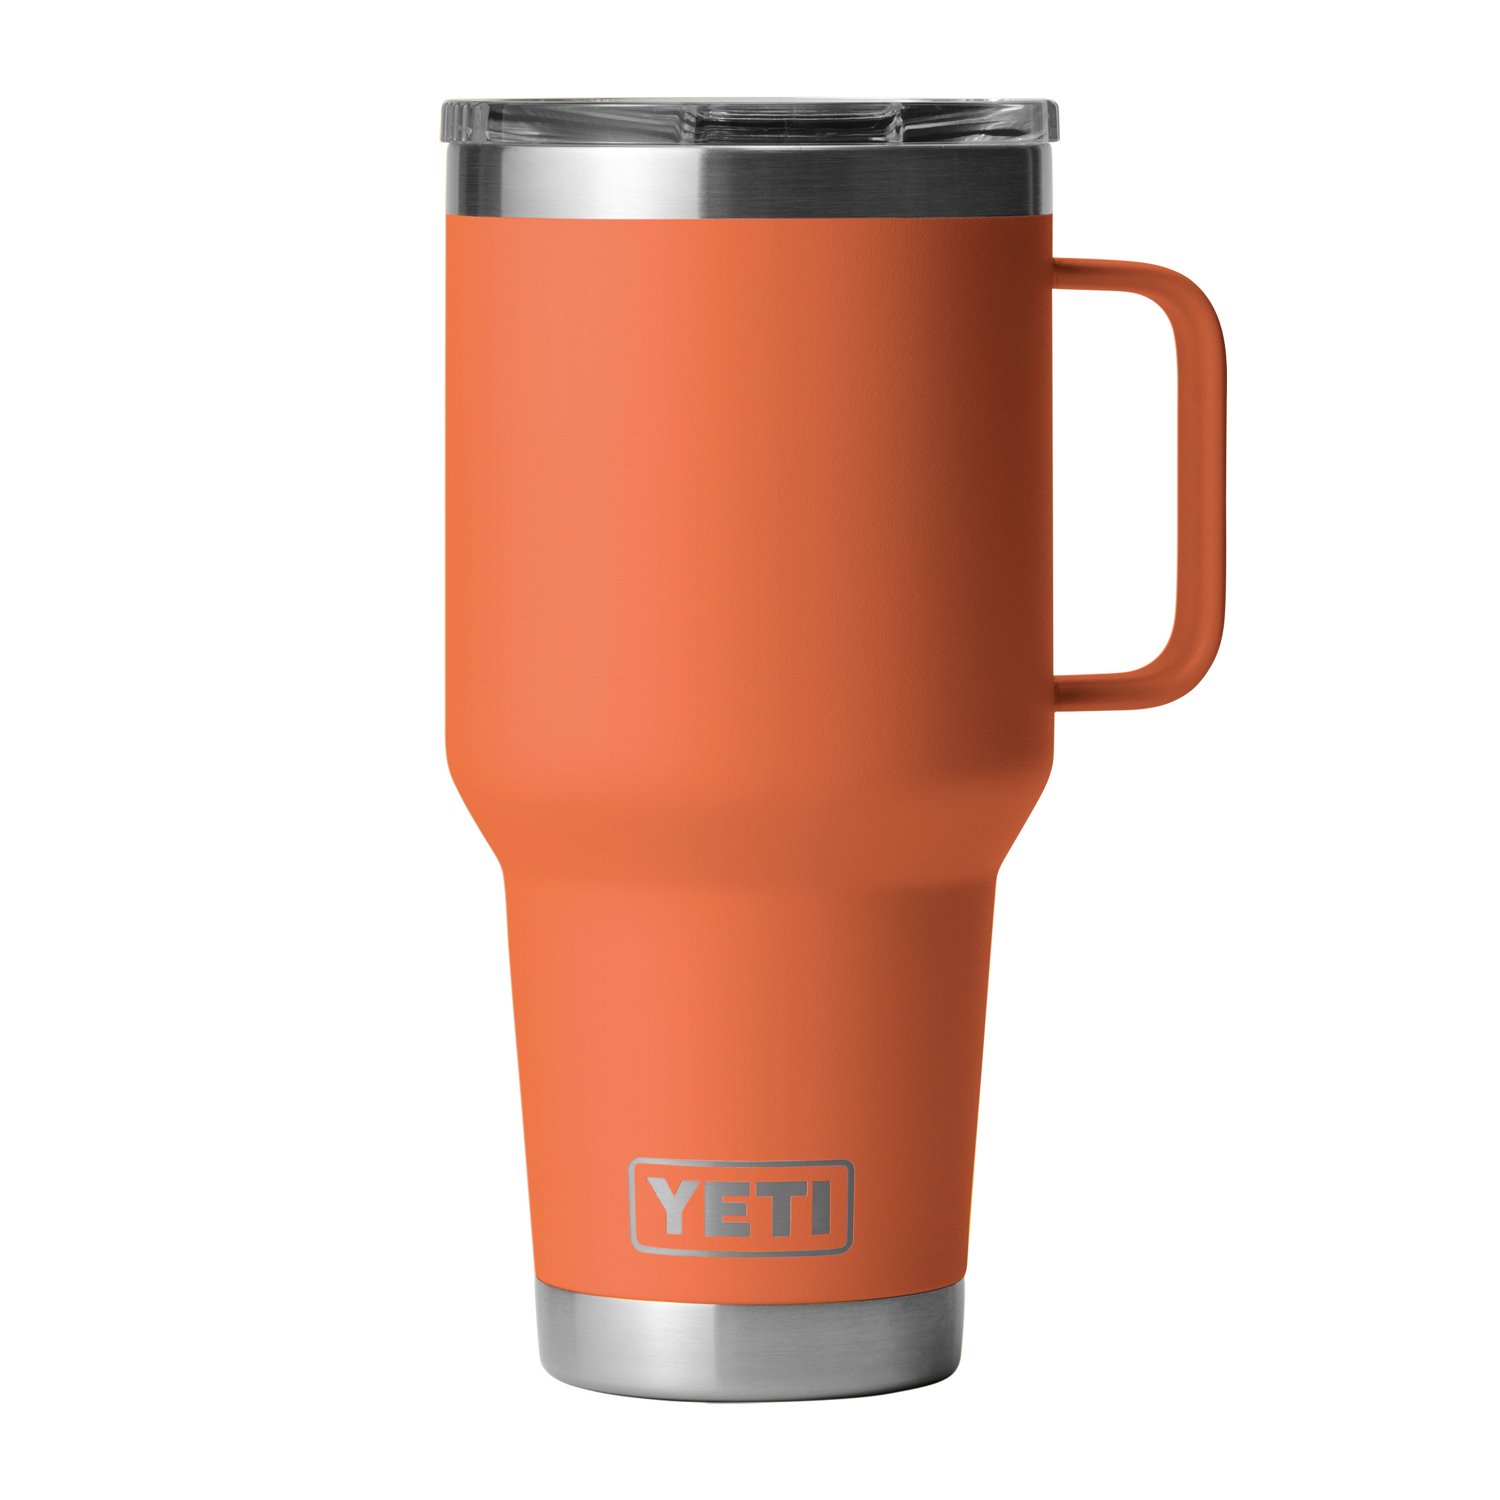 YETI Rambler Travel Mug with Stronghold Lid, 30 oz. - Runnings